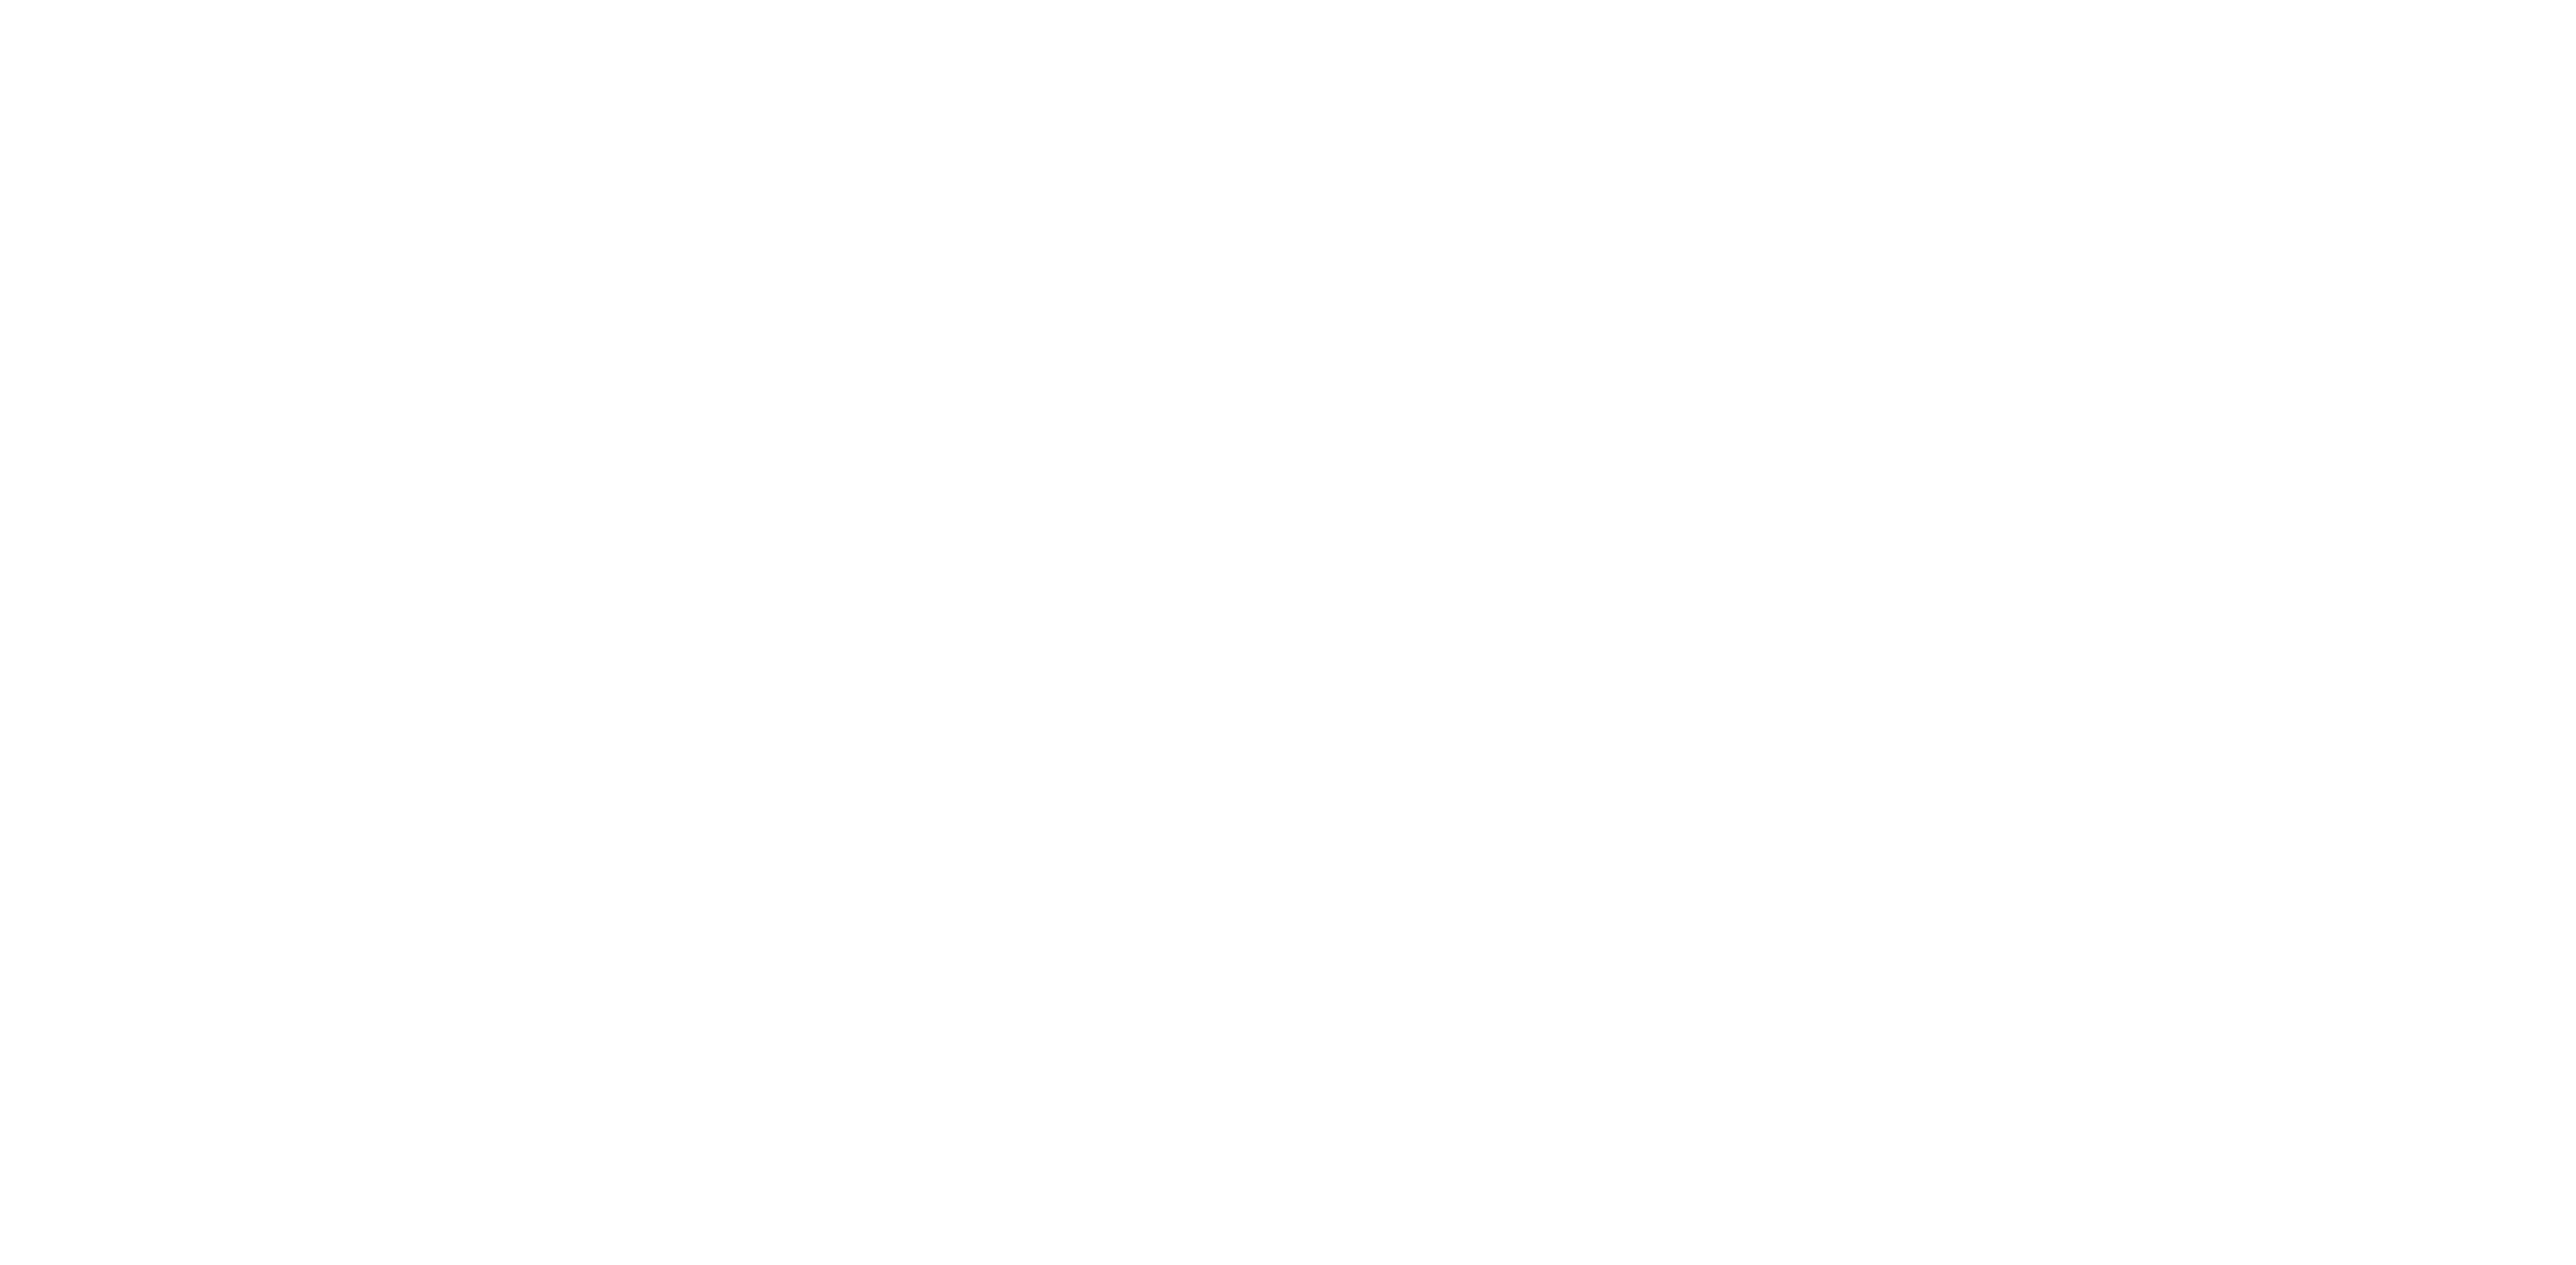  Smyler, the event application